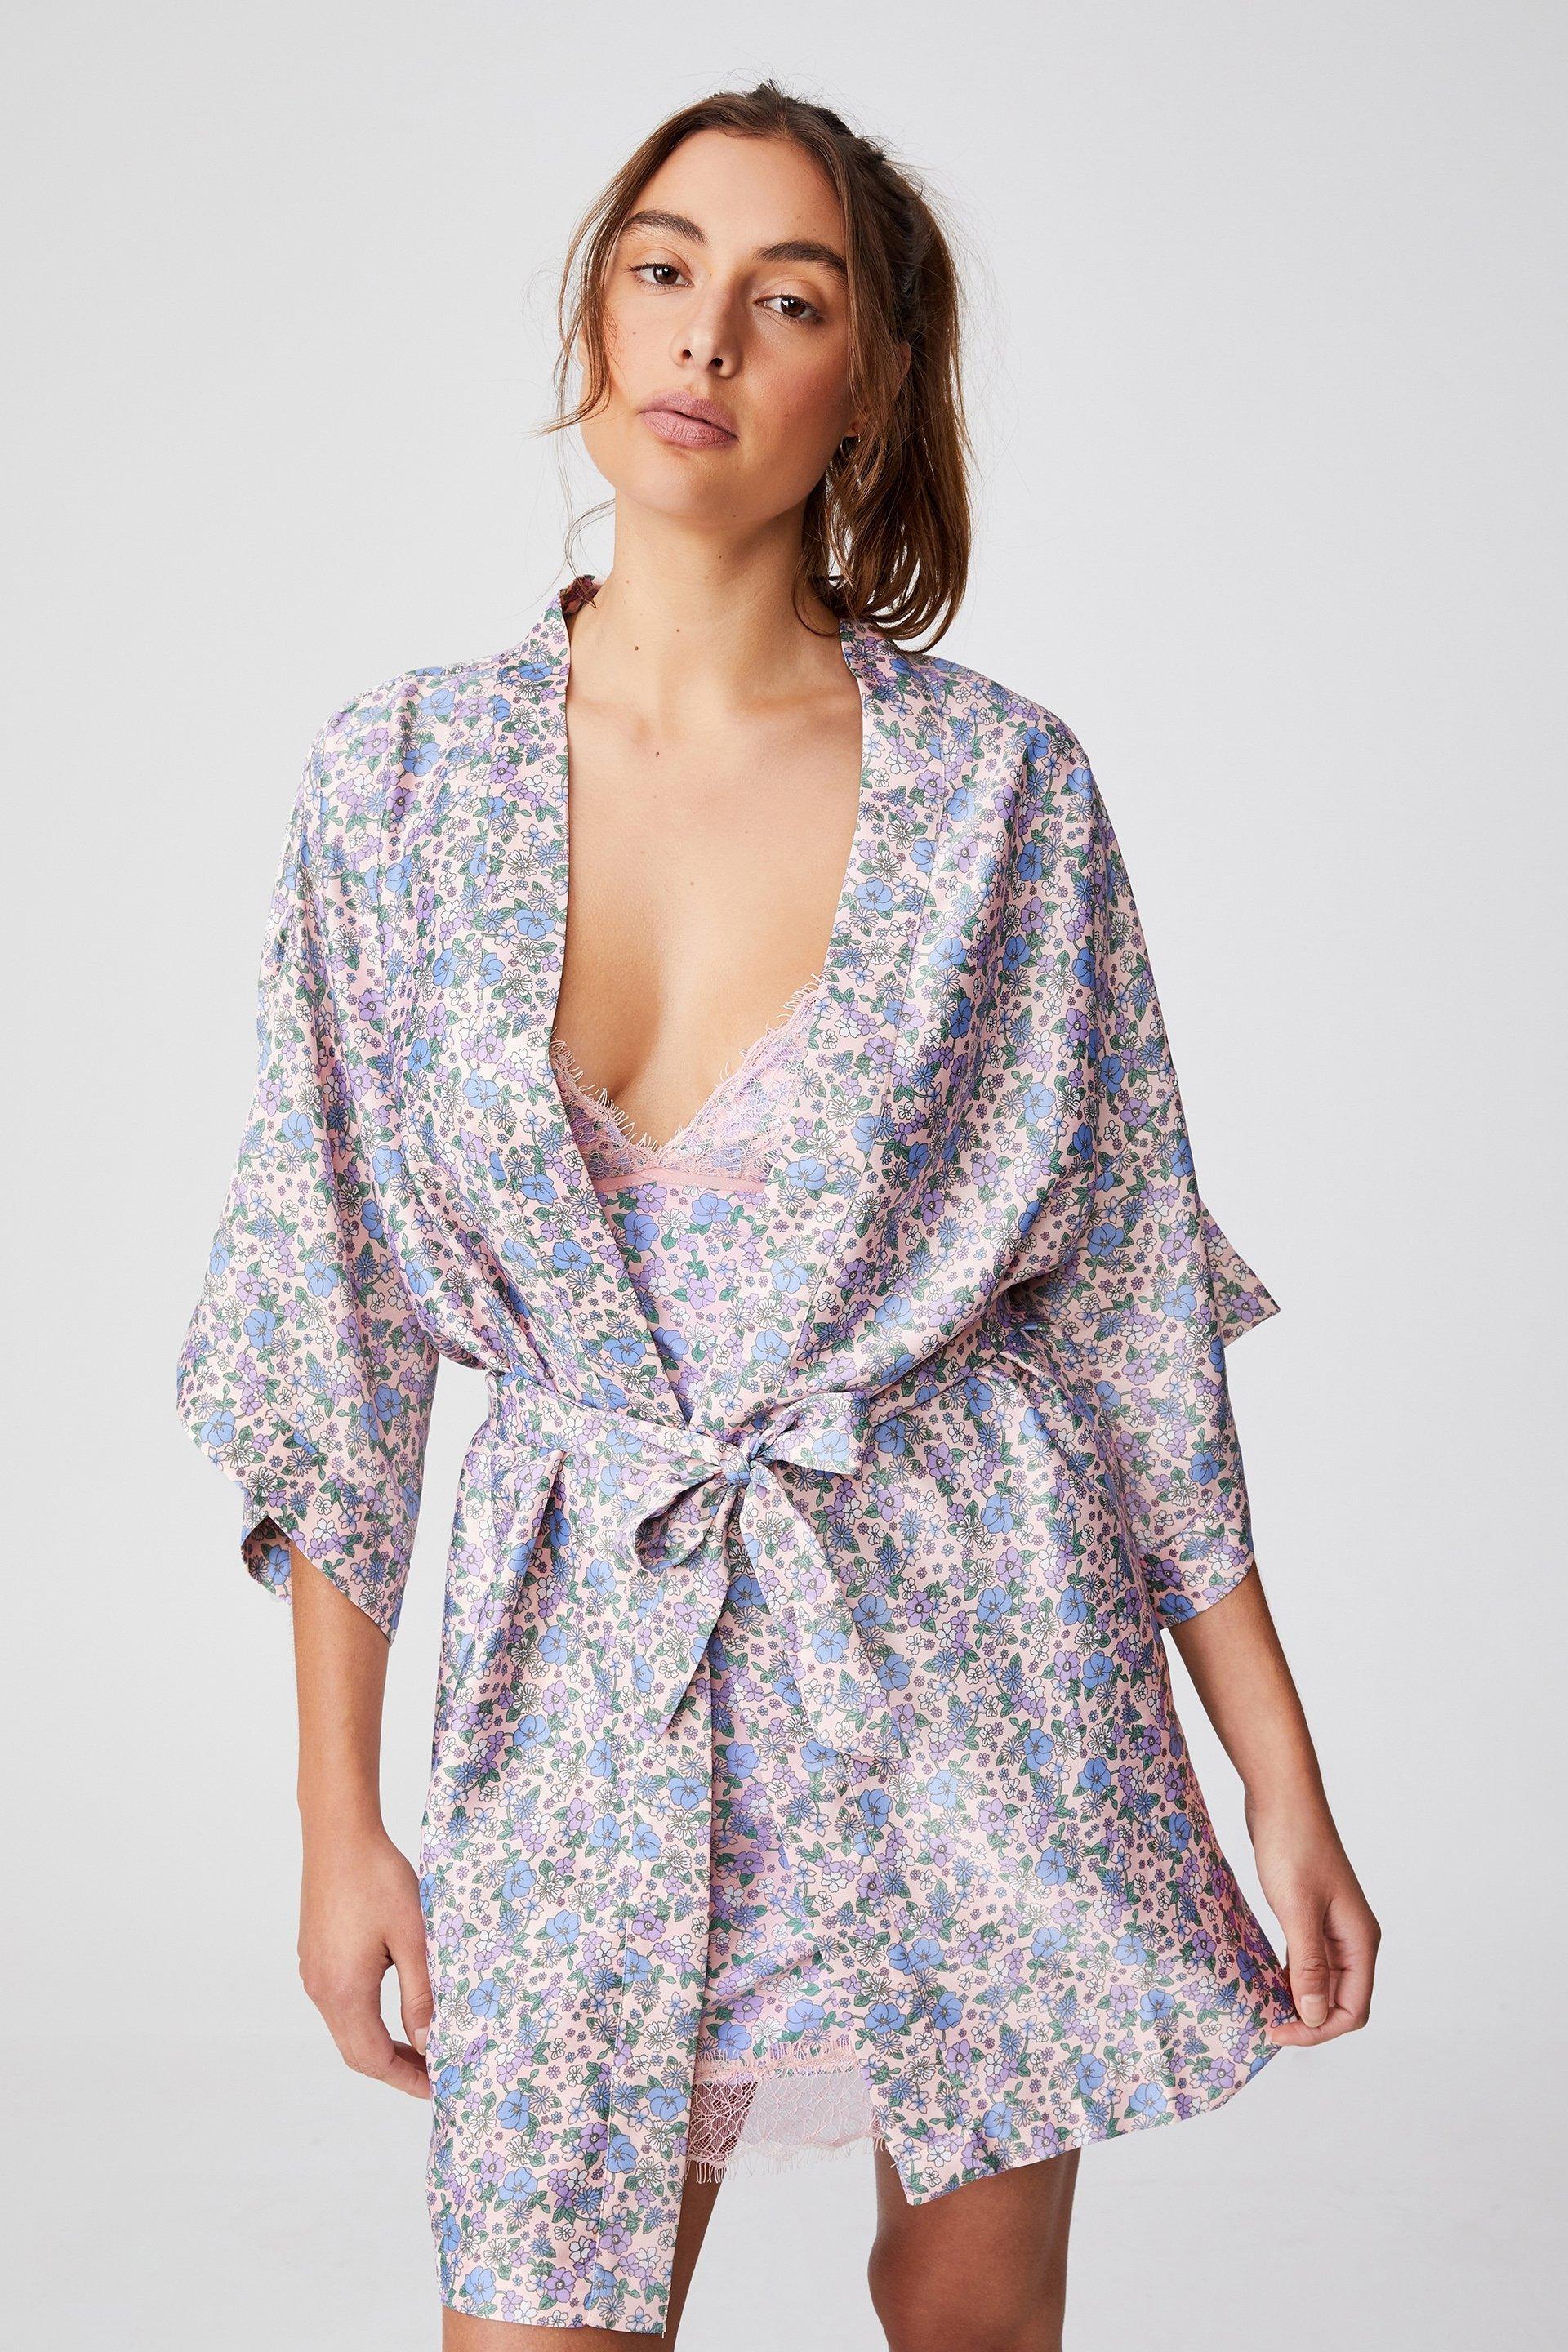 Satin Robe Grandma Garden Ditzy Cotton On Sleepwear